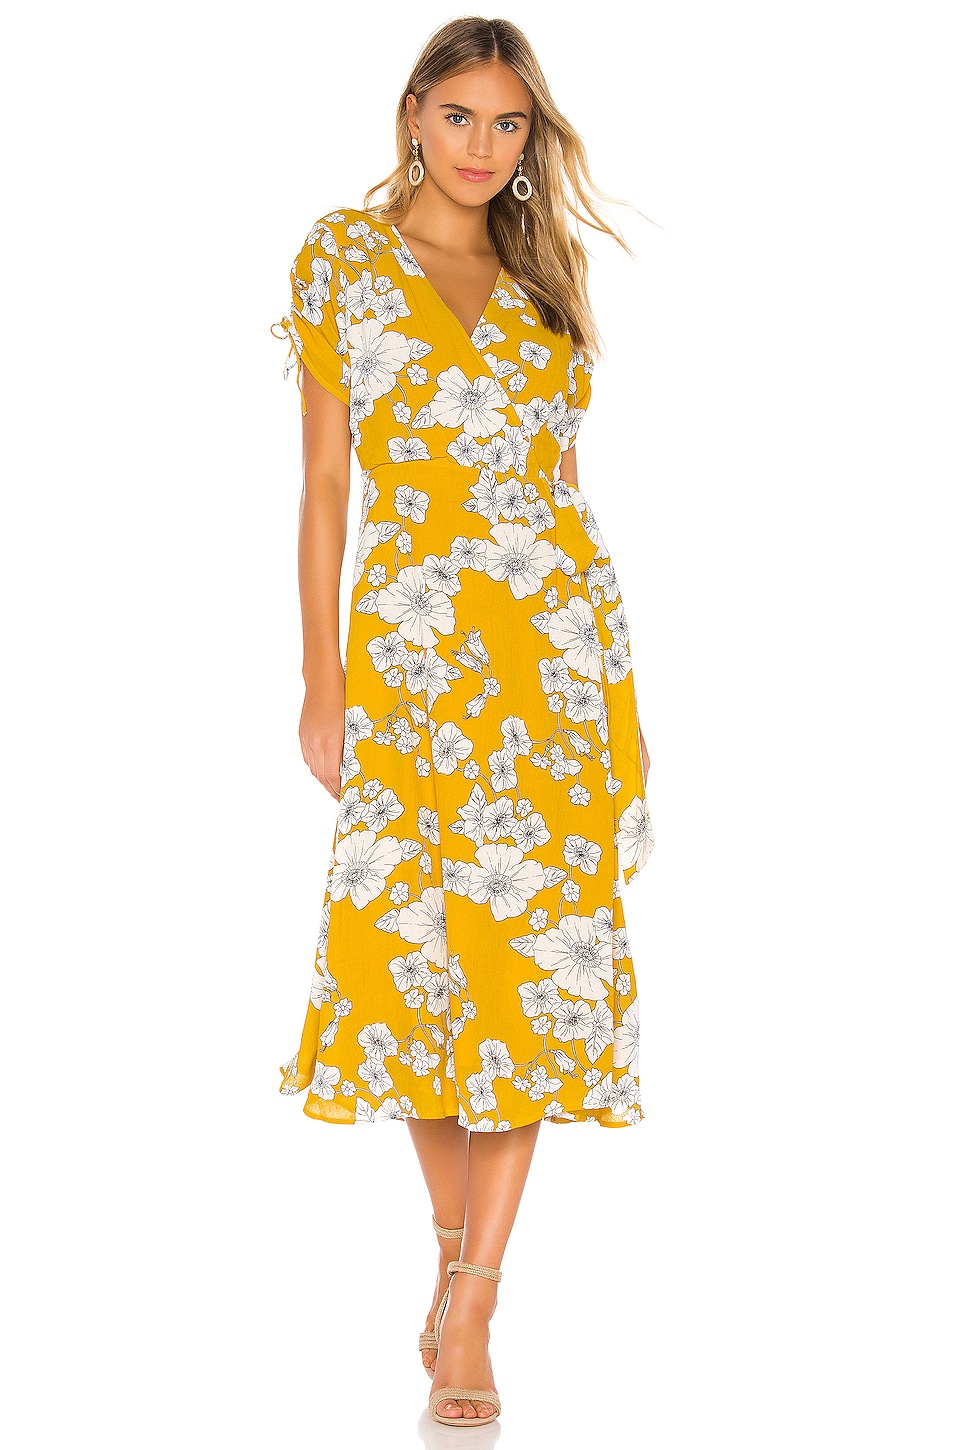 revolve yellow floral dress